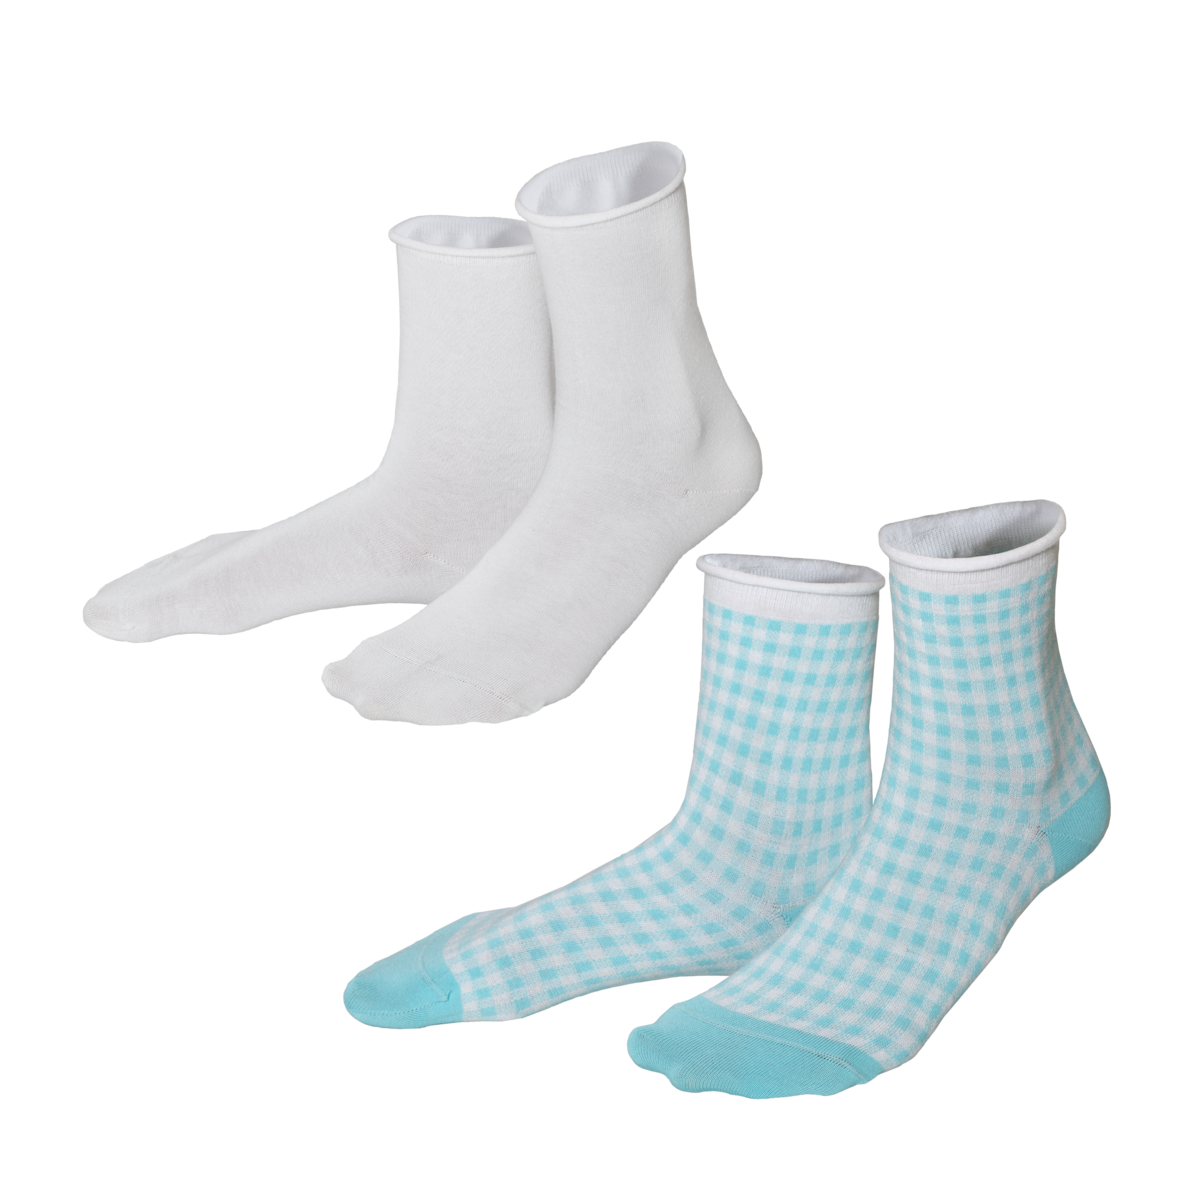 Multicolor Socks, Pack of 2, ALEXIS